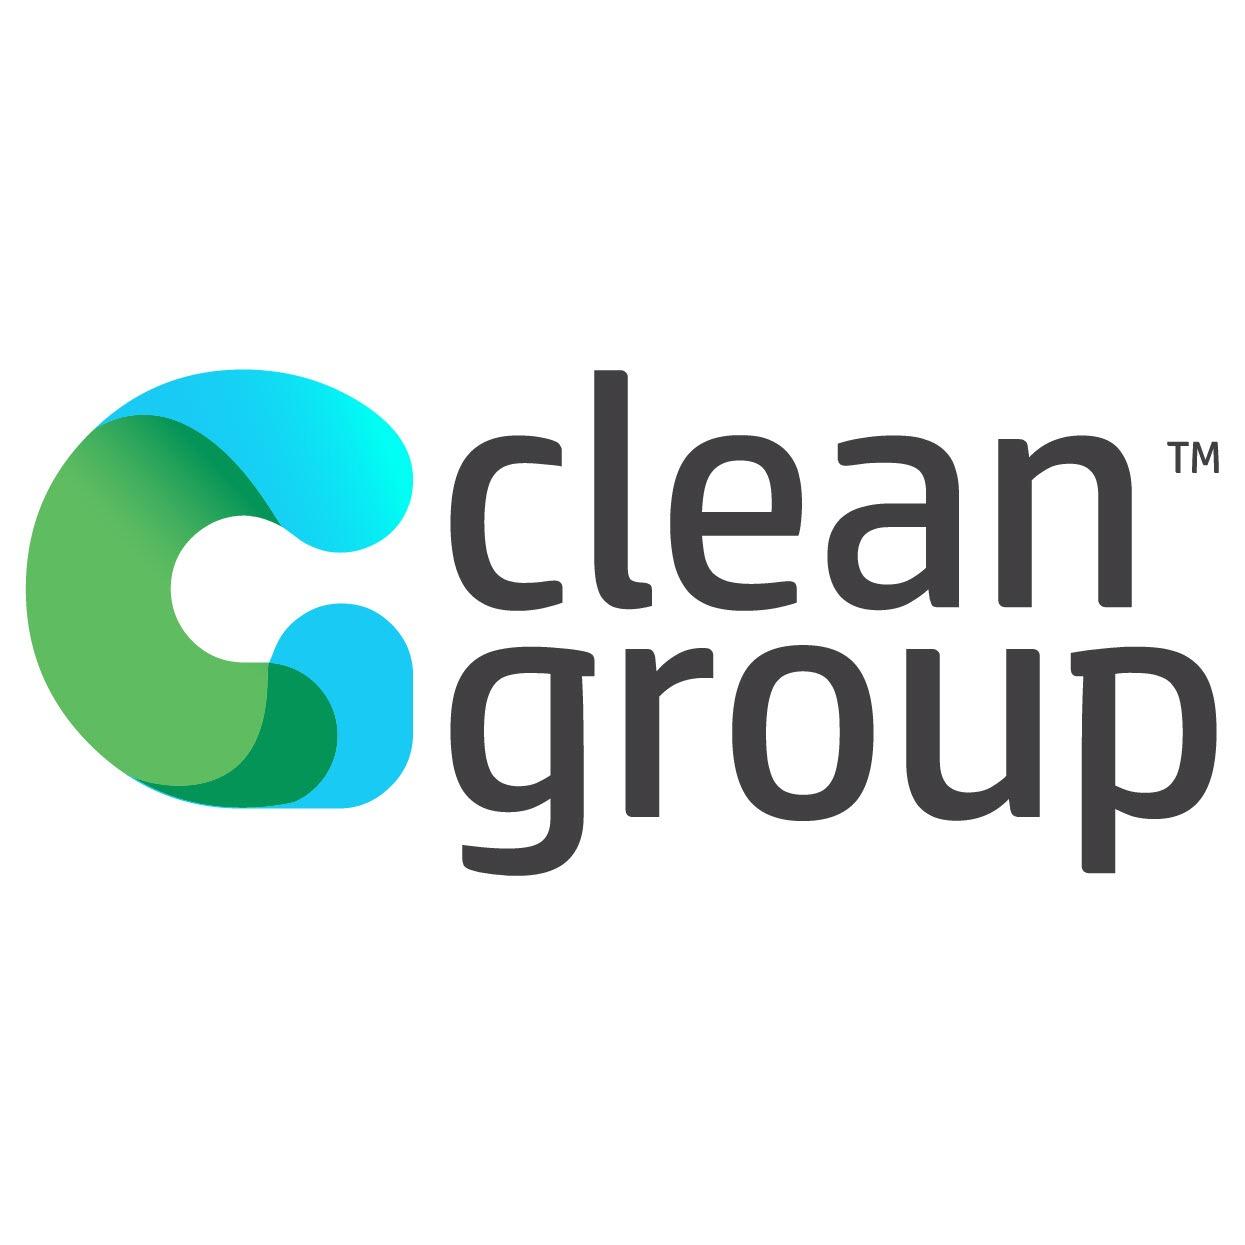 Clean Group Sydney